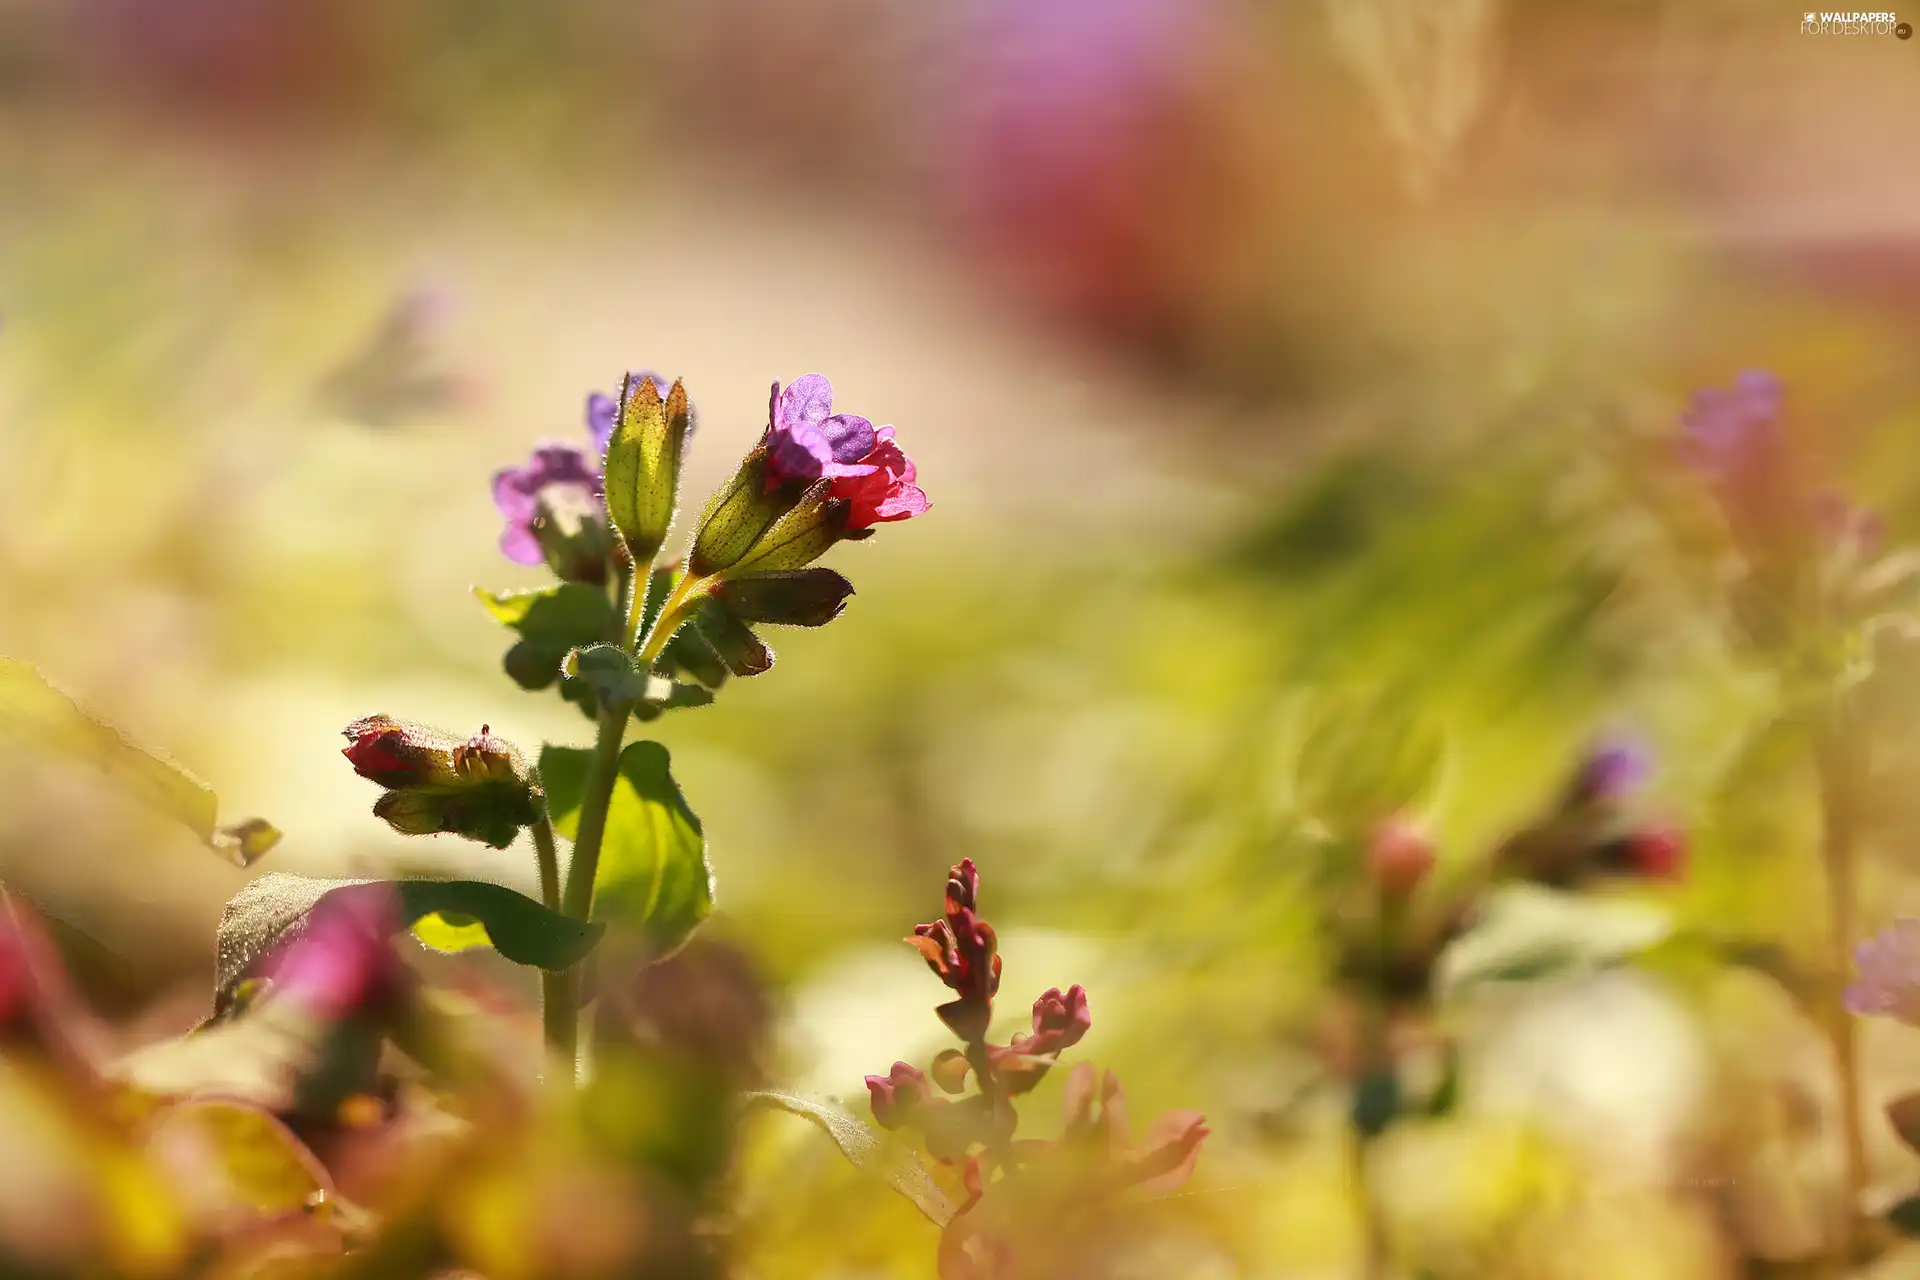 blurry background, purple, Flowers